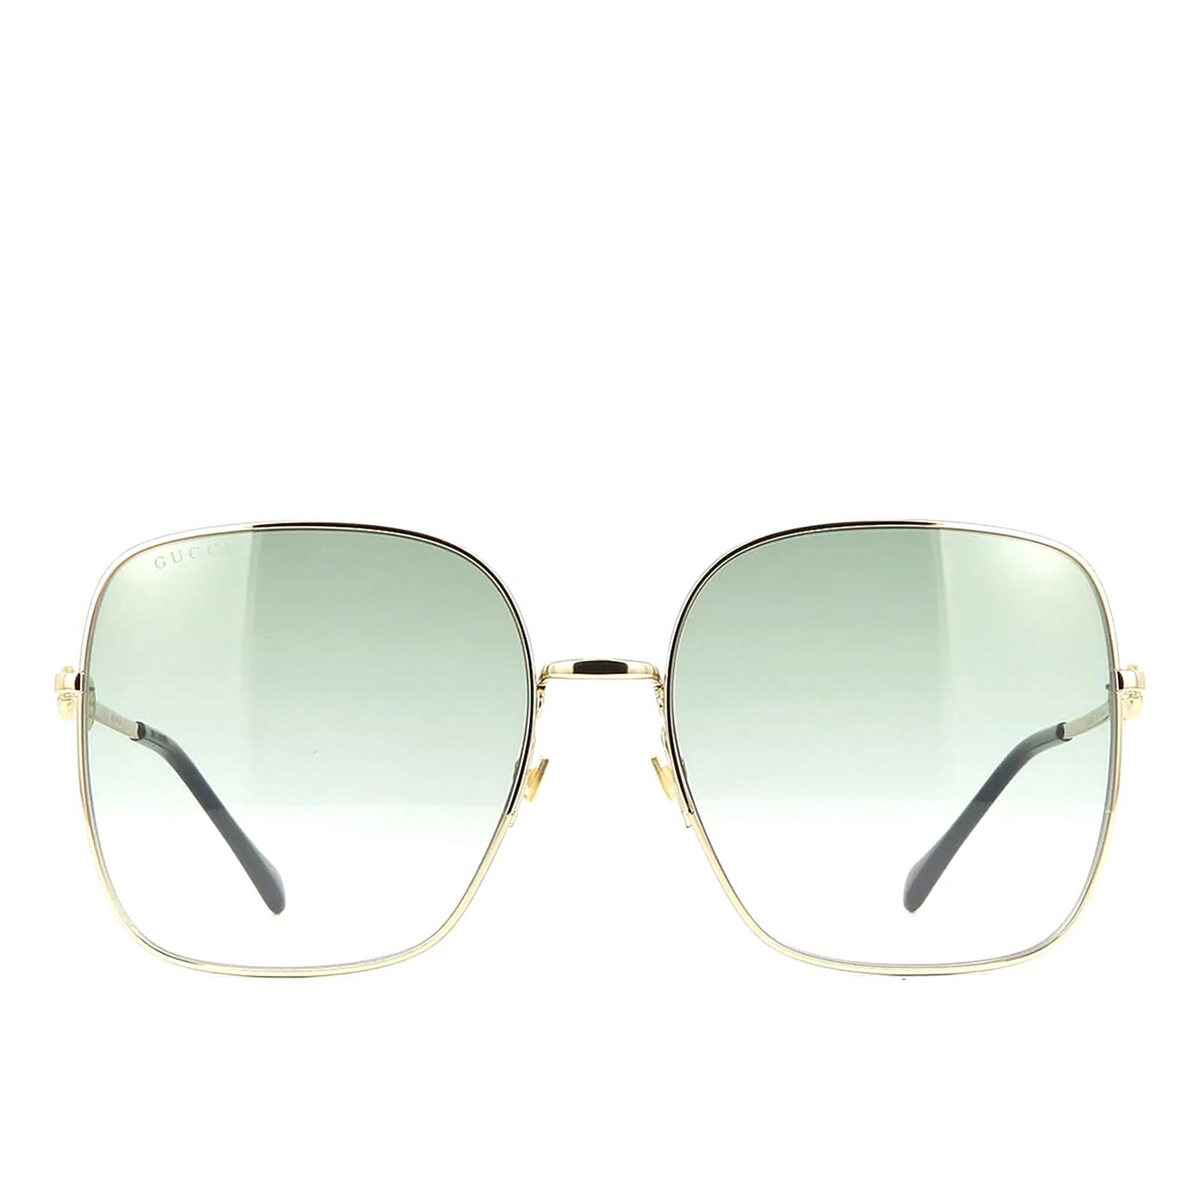 Gucci® Square Sunglasses: GG0879S color 003 Gold - front view